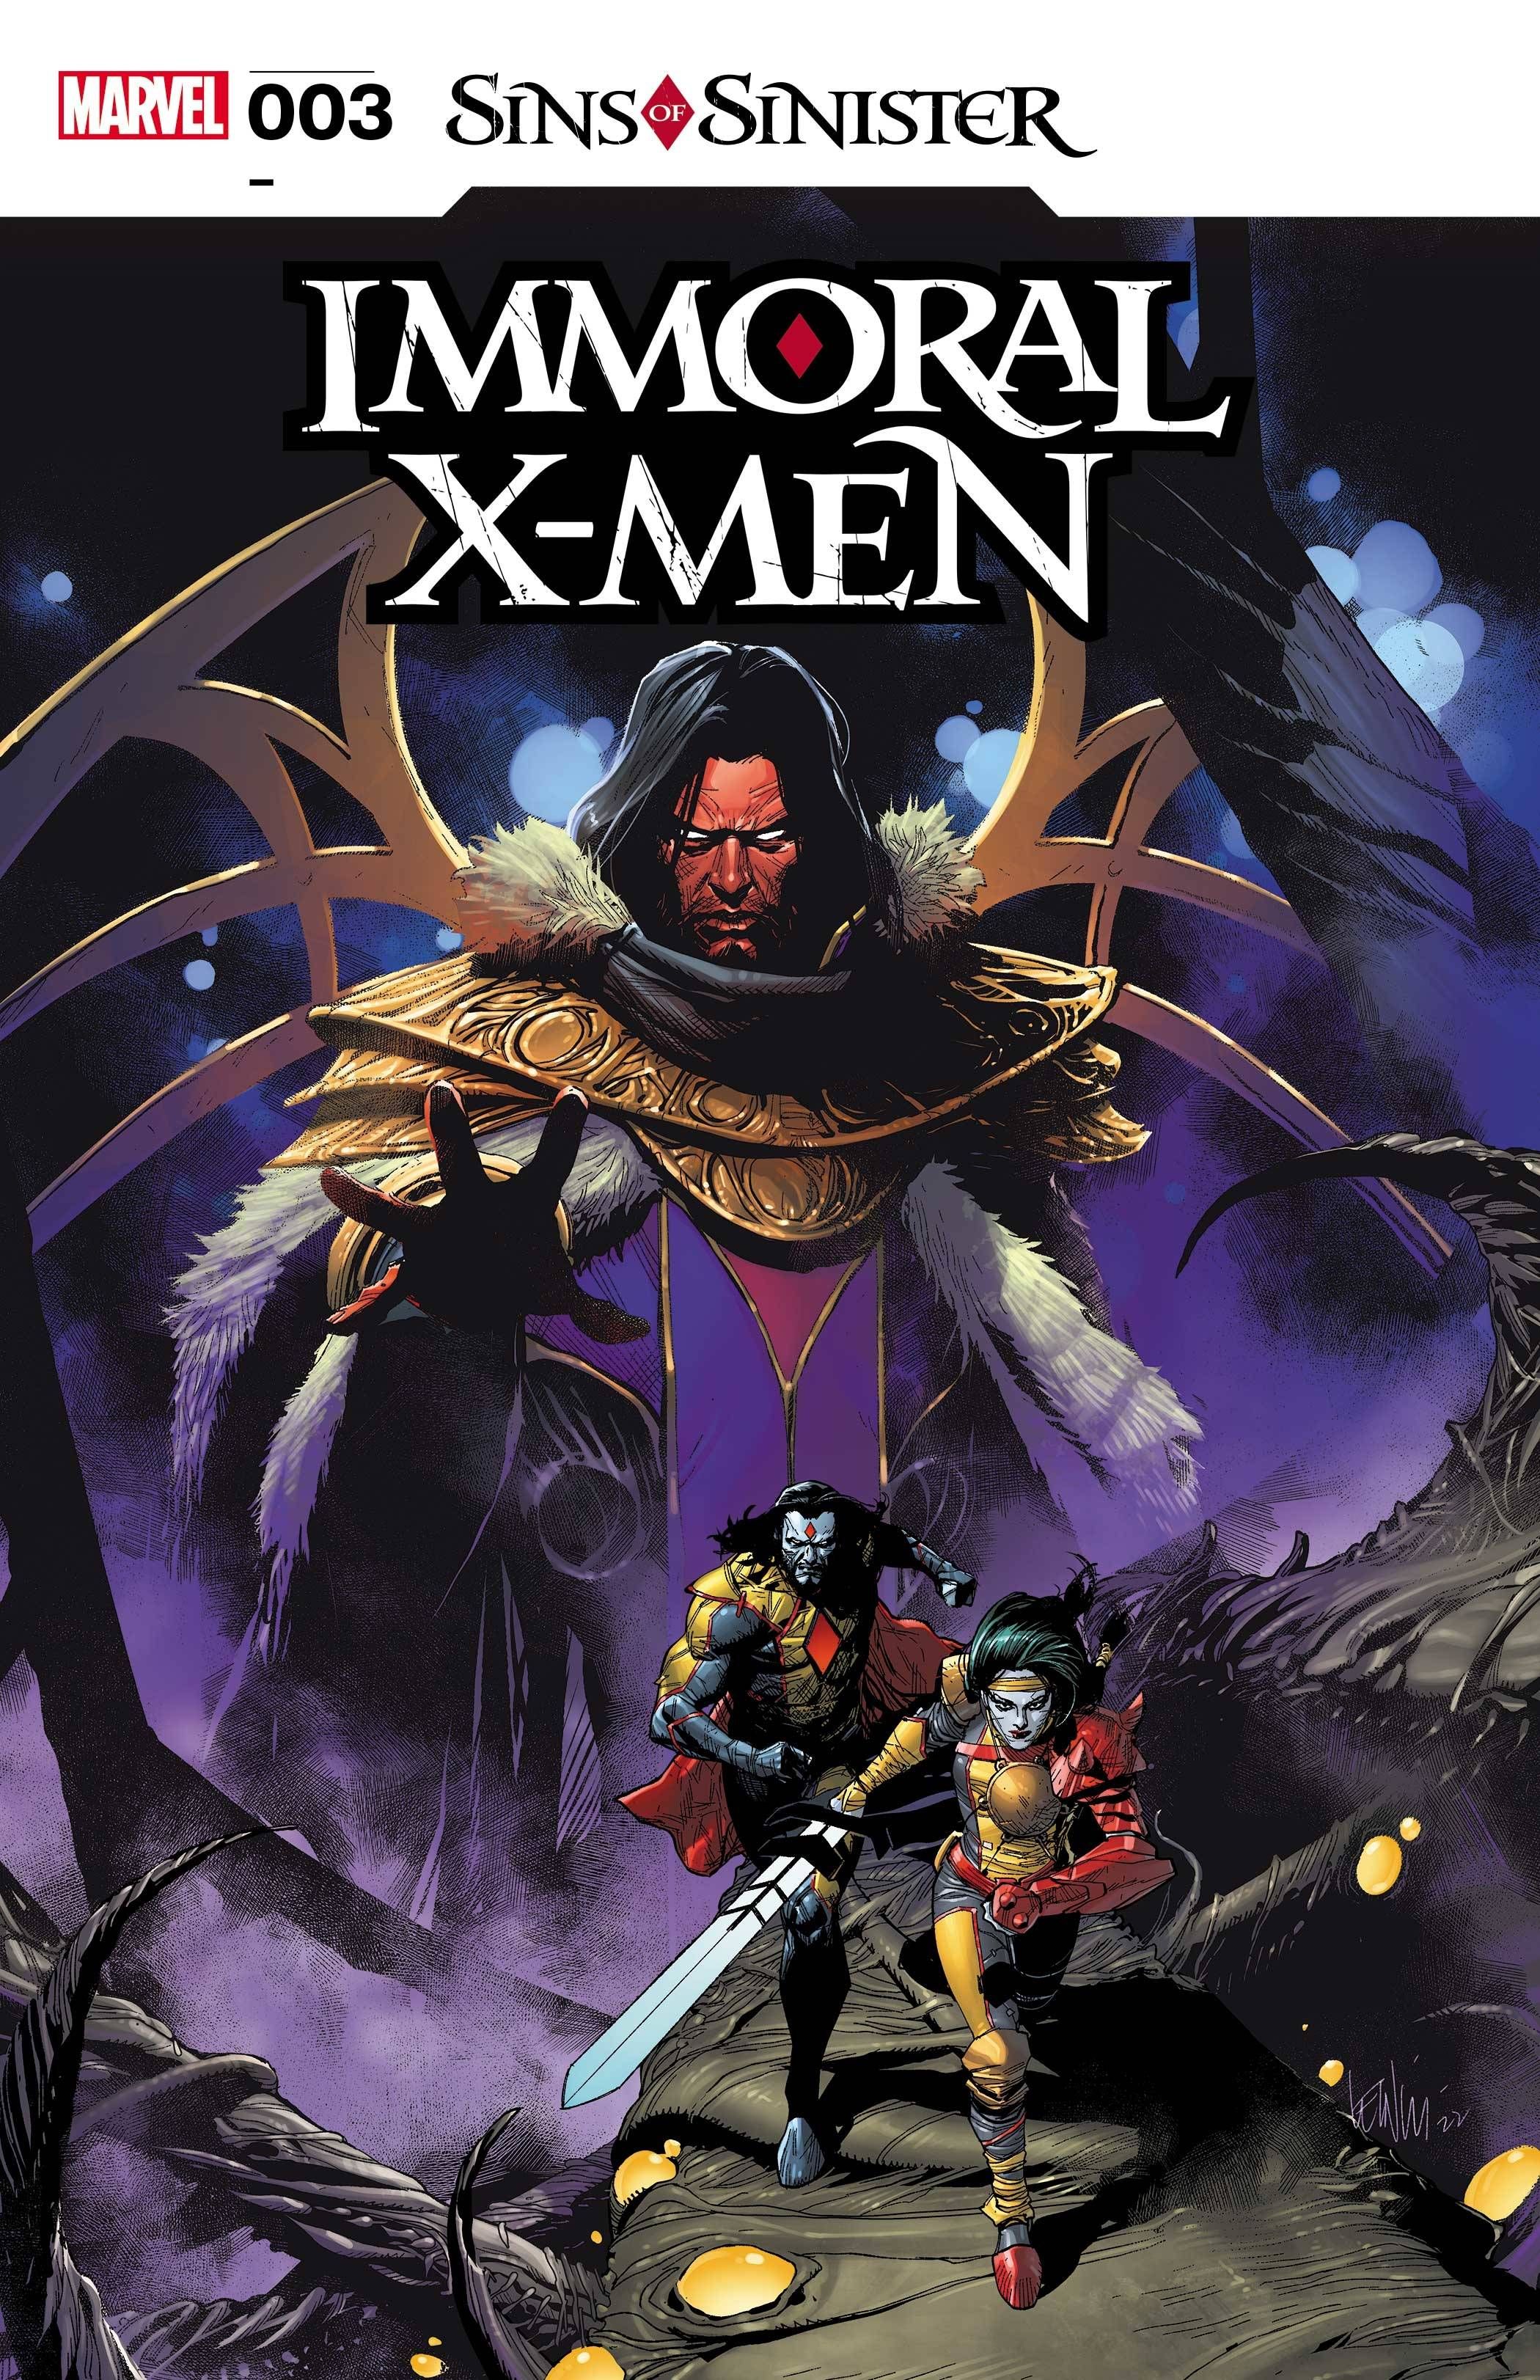 Immoral X-men #3 Comic